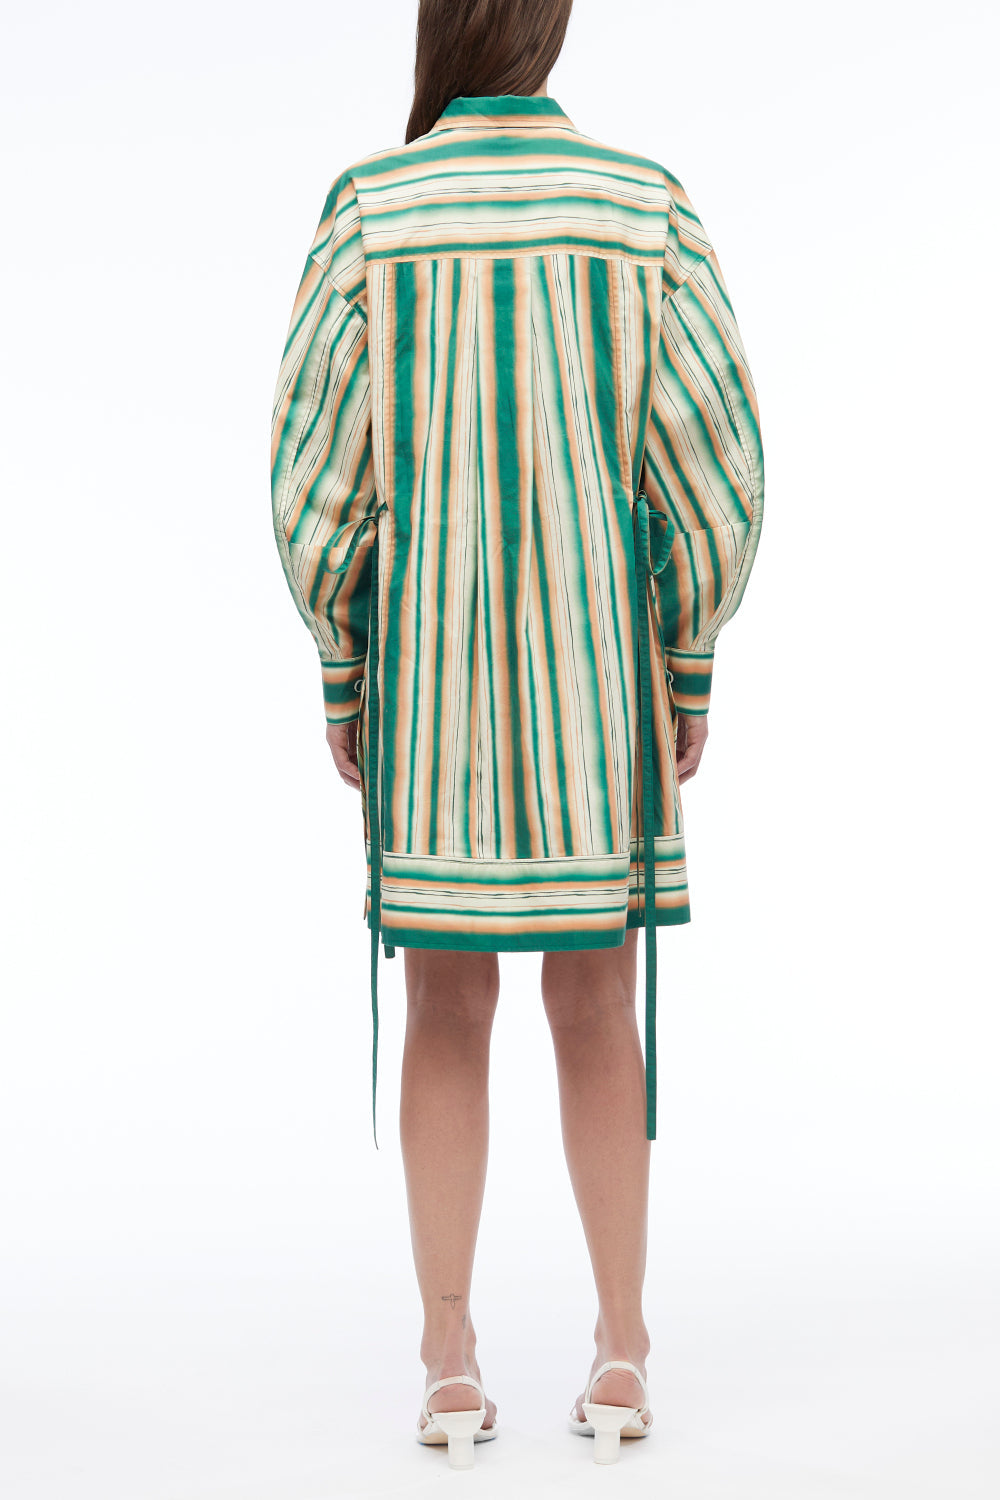 Painted Stripe Shirt Dress – 3.1 Phillip Lim